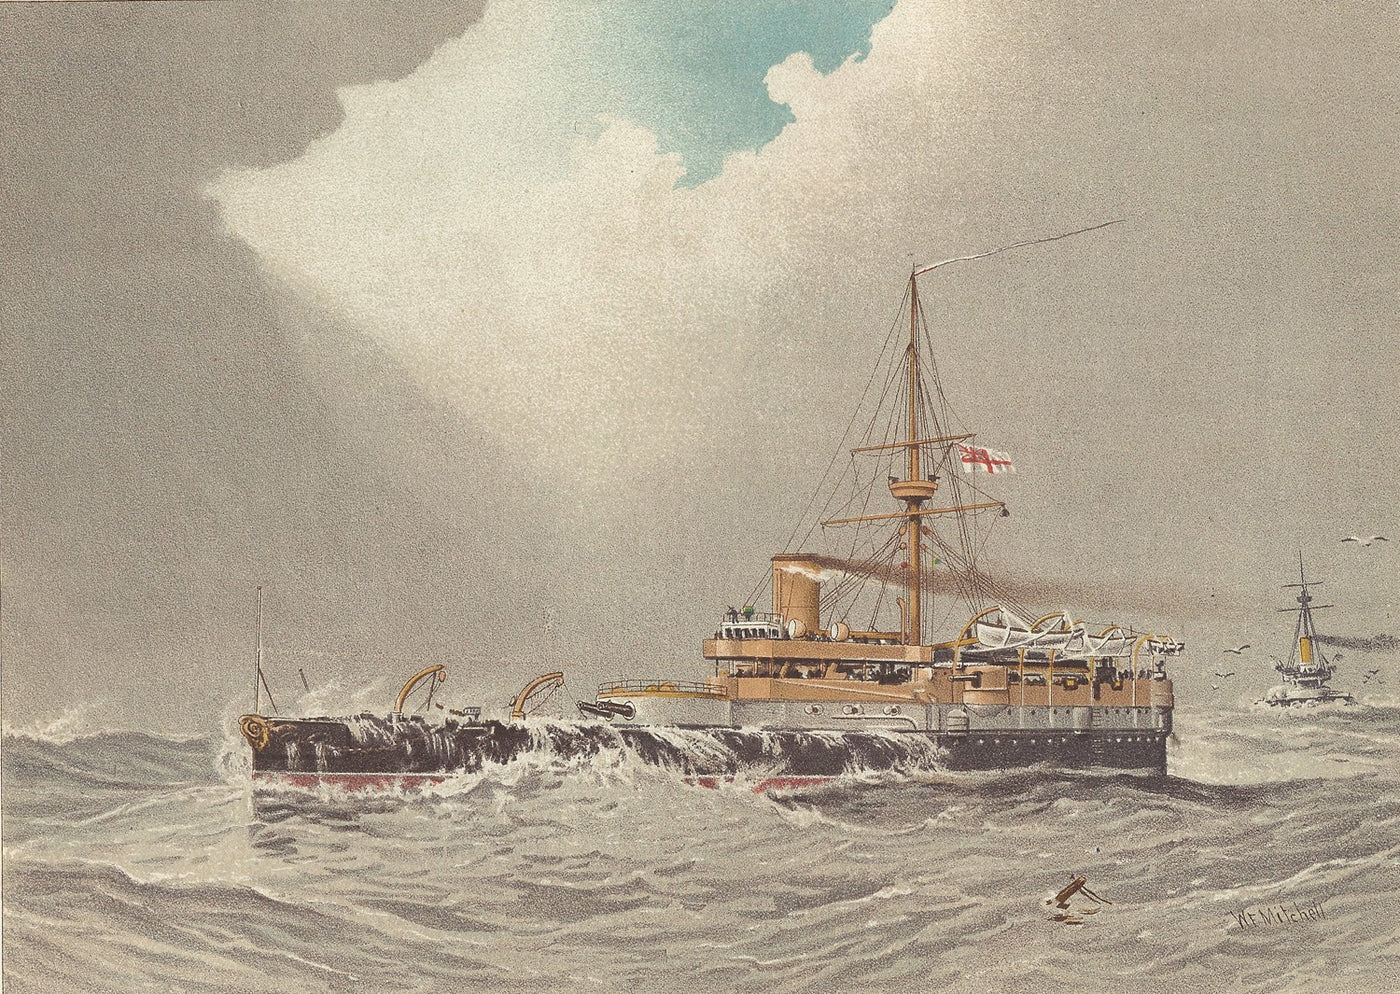 HMS Hero 2nd Class Battleship antique print published 1890